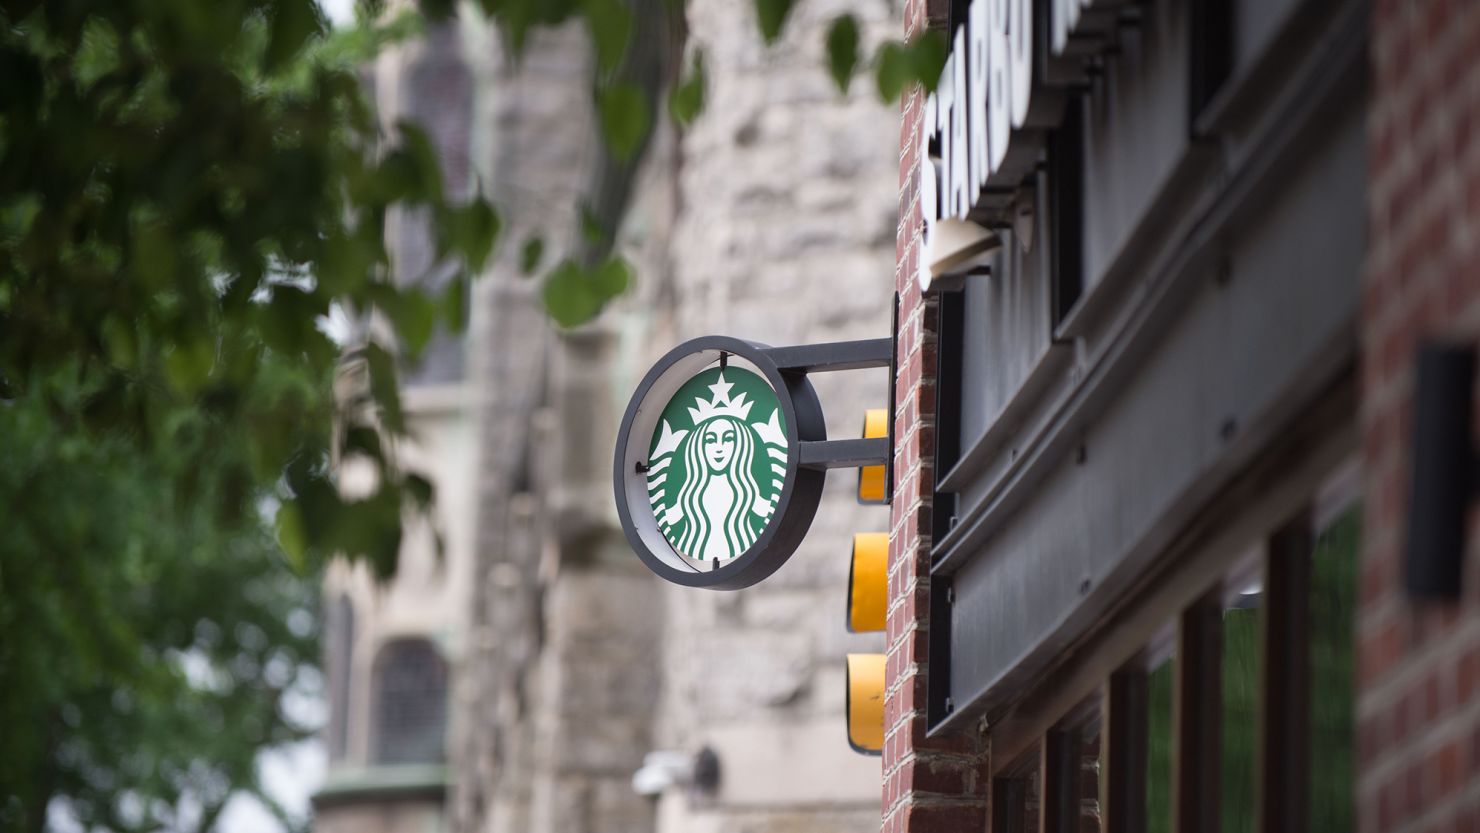 Starbucks Philadelphia store 2018 racial discrimination case FILE RESTRICTED